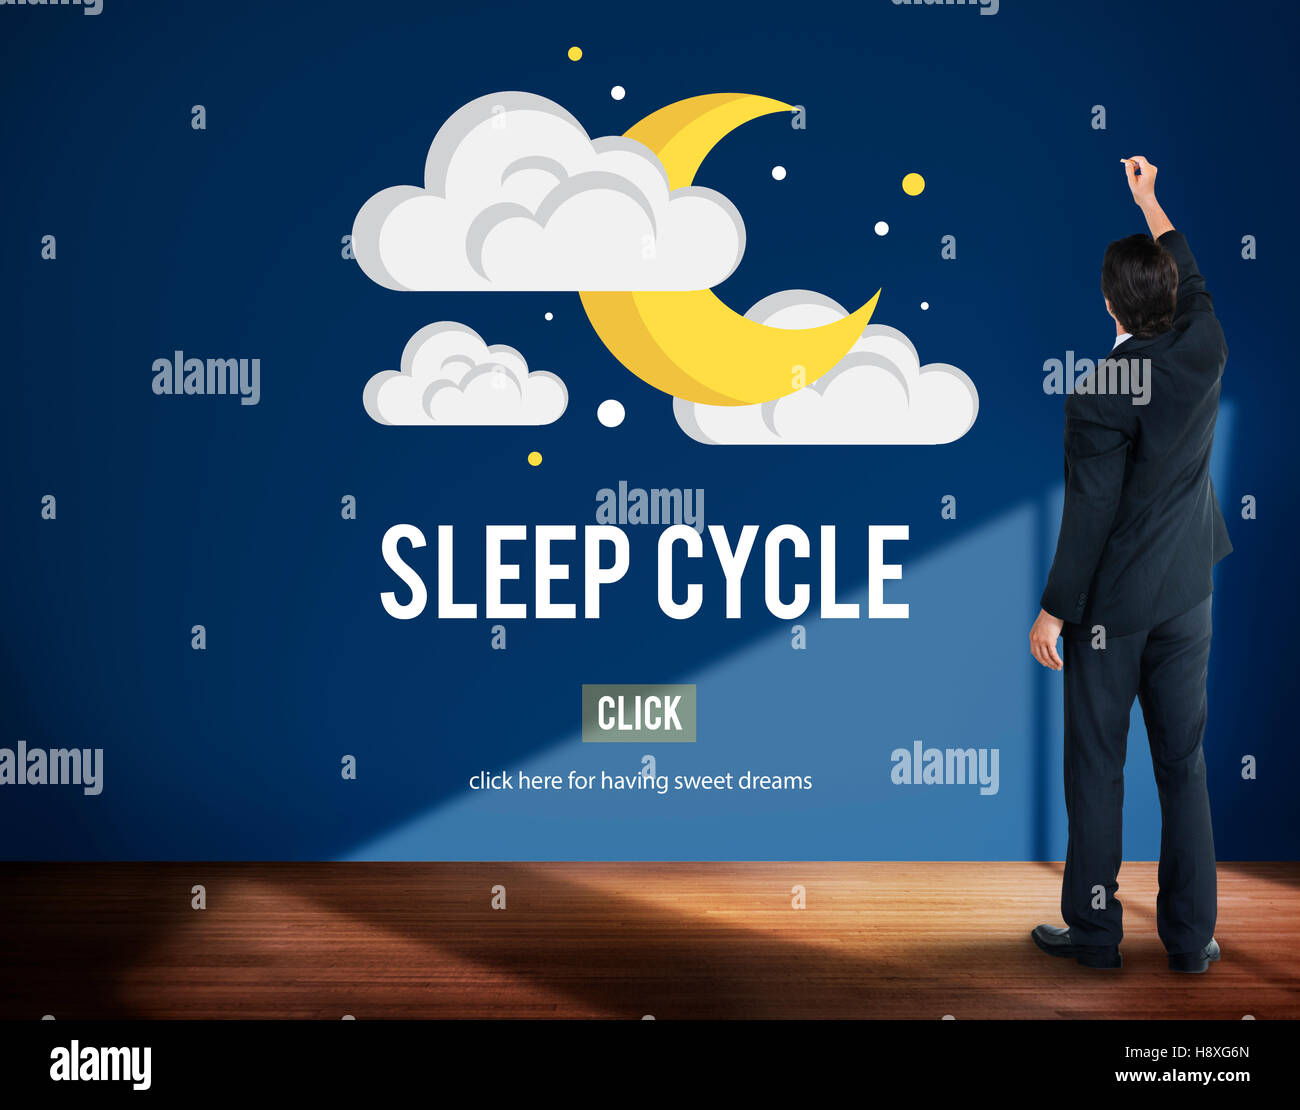 Sleep Cycle Awake REM Rapid Eye Movement Dream Relaxation Concept Stock Photo